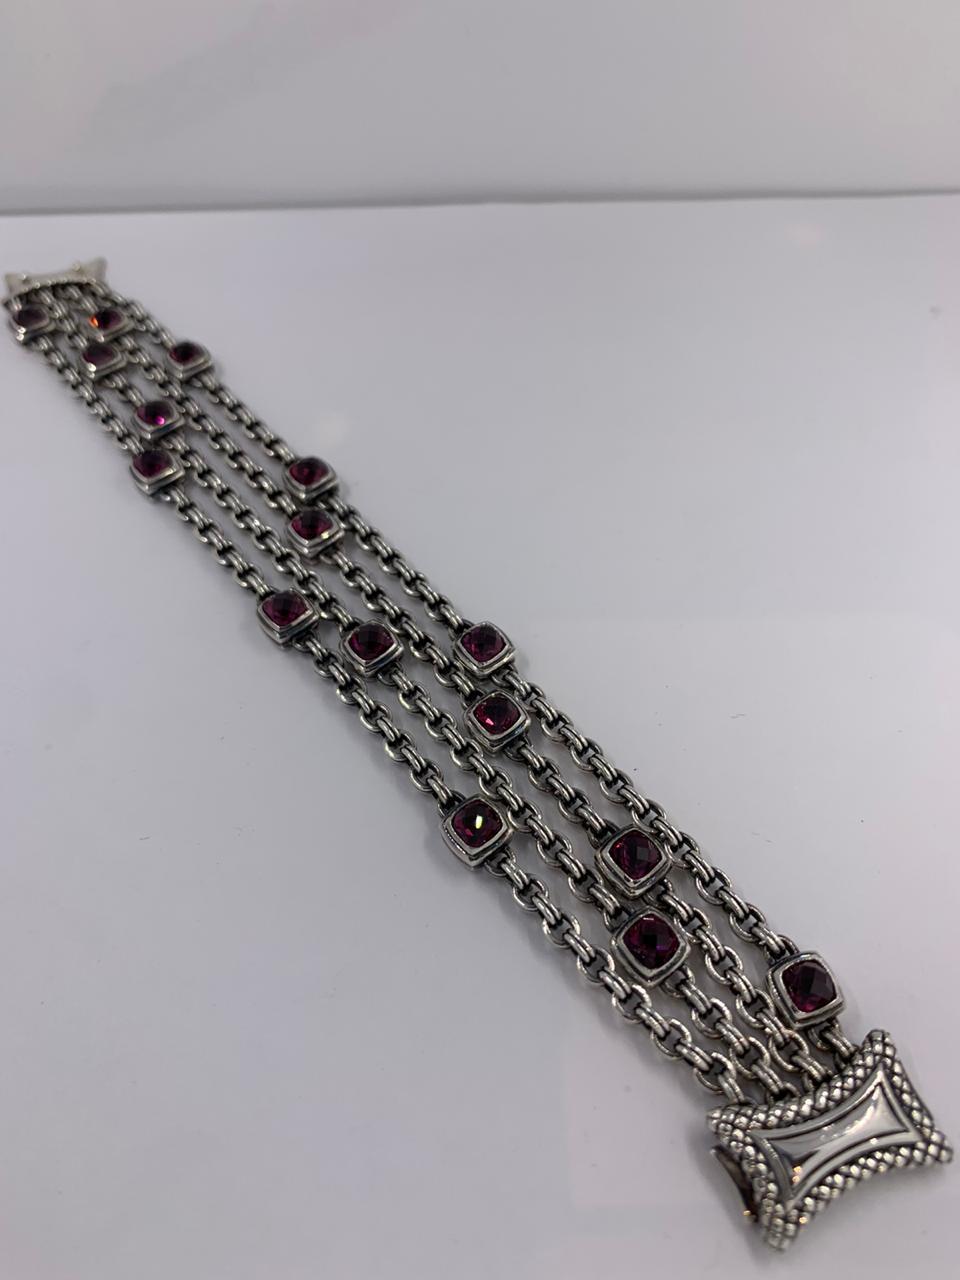 Scott Kay Silver Bracelet
4 row silver with garnet link bracelet
SKS-10050